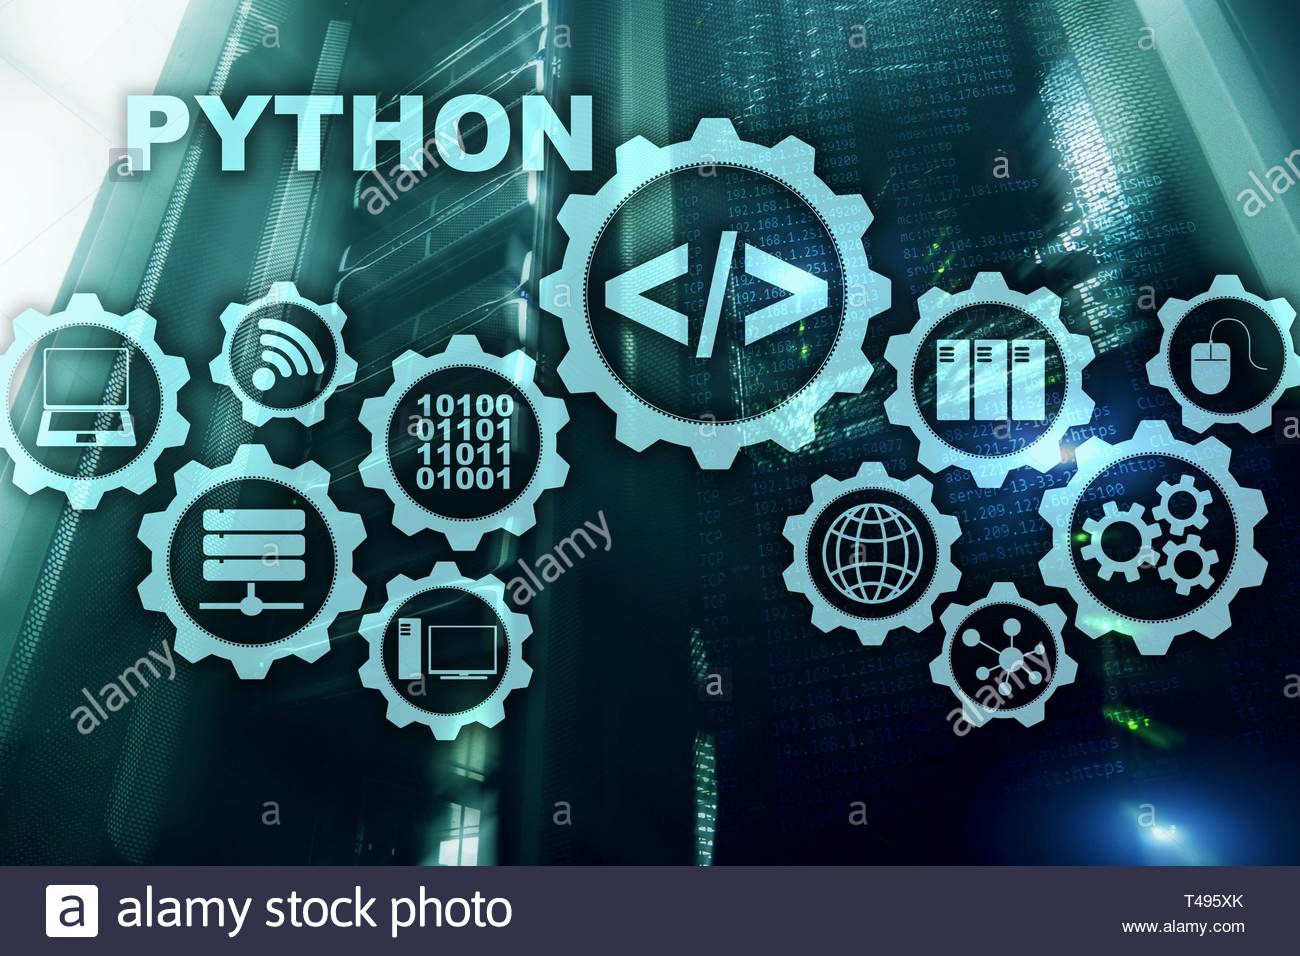 python server monitoring